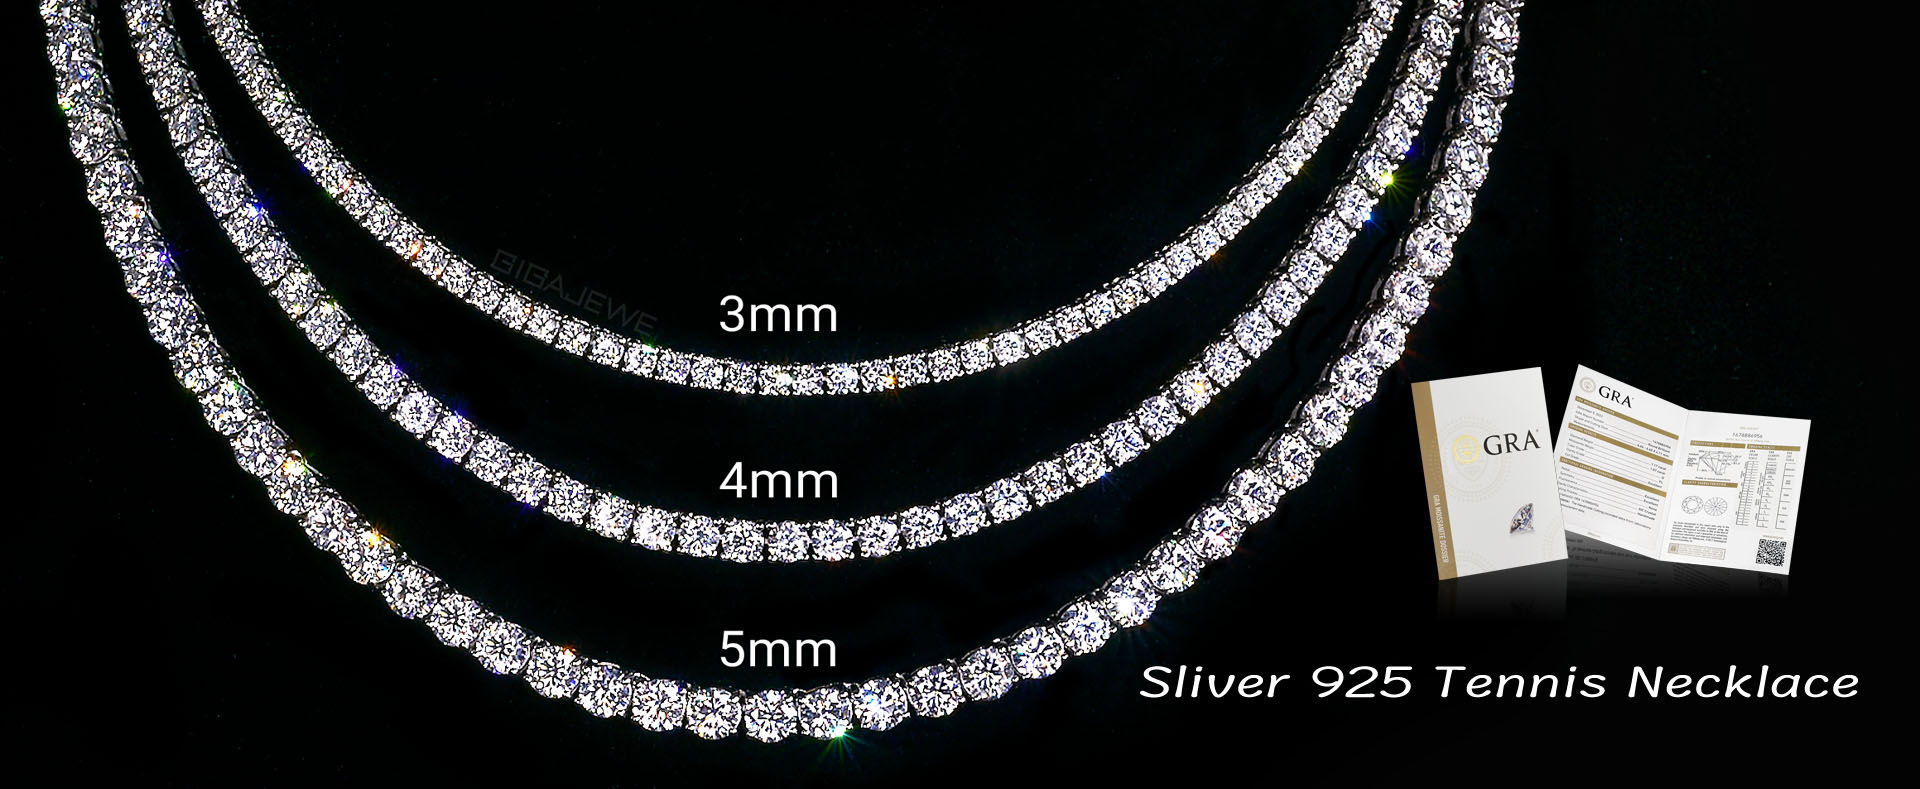 Loose Gemstones 0.5ct 5ct EF White Pear Shape Diamond Cut